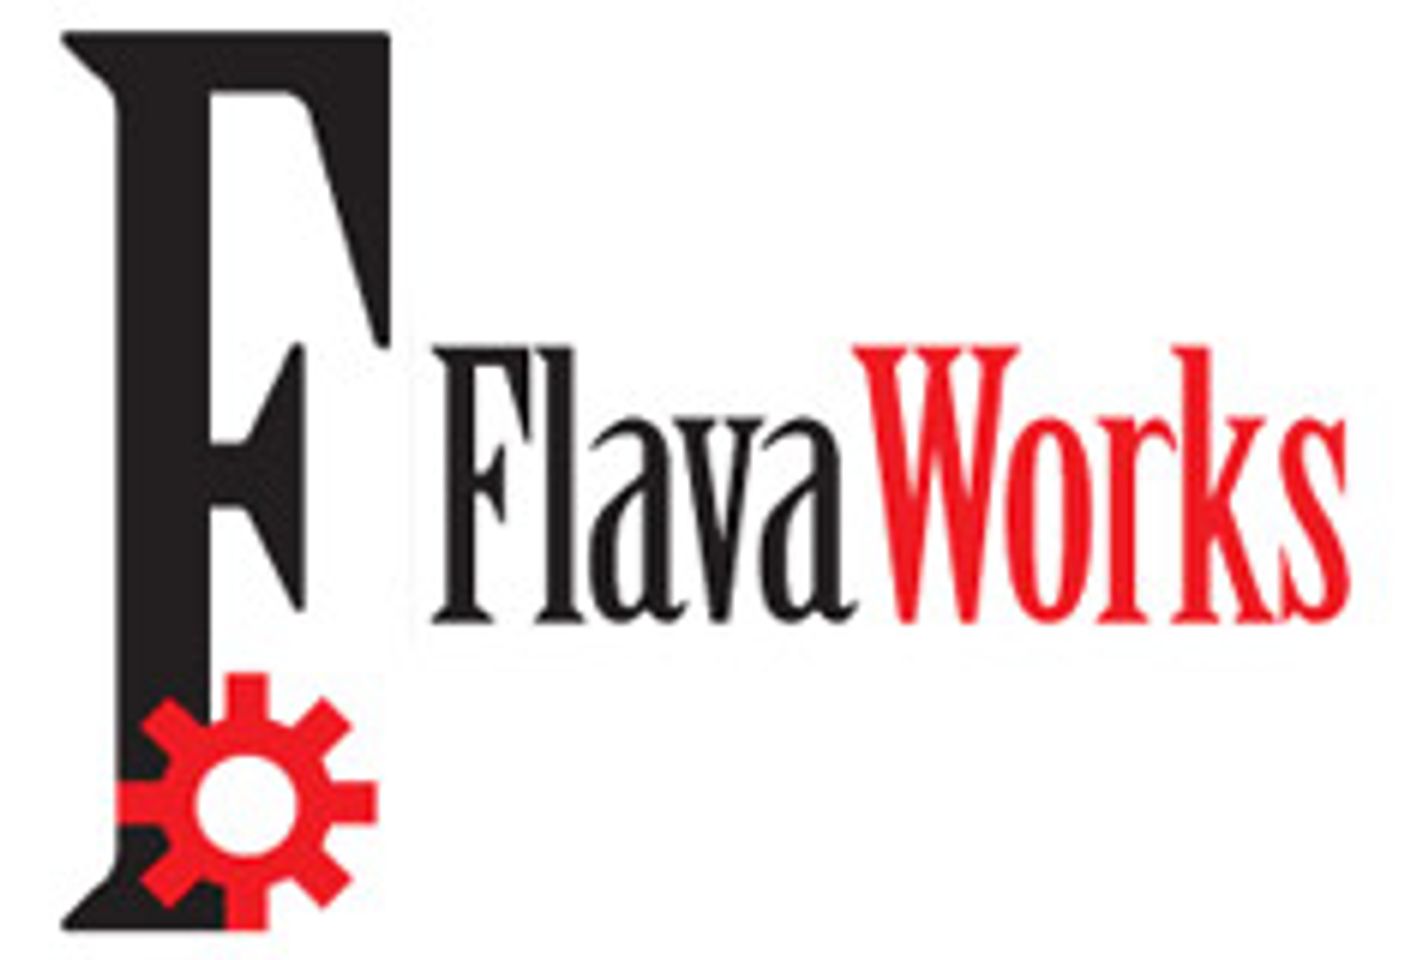 Company Profile: Flava Works